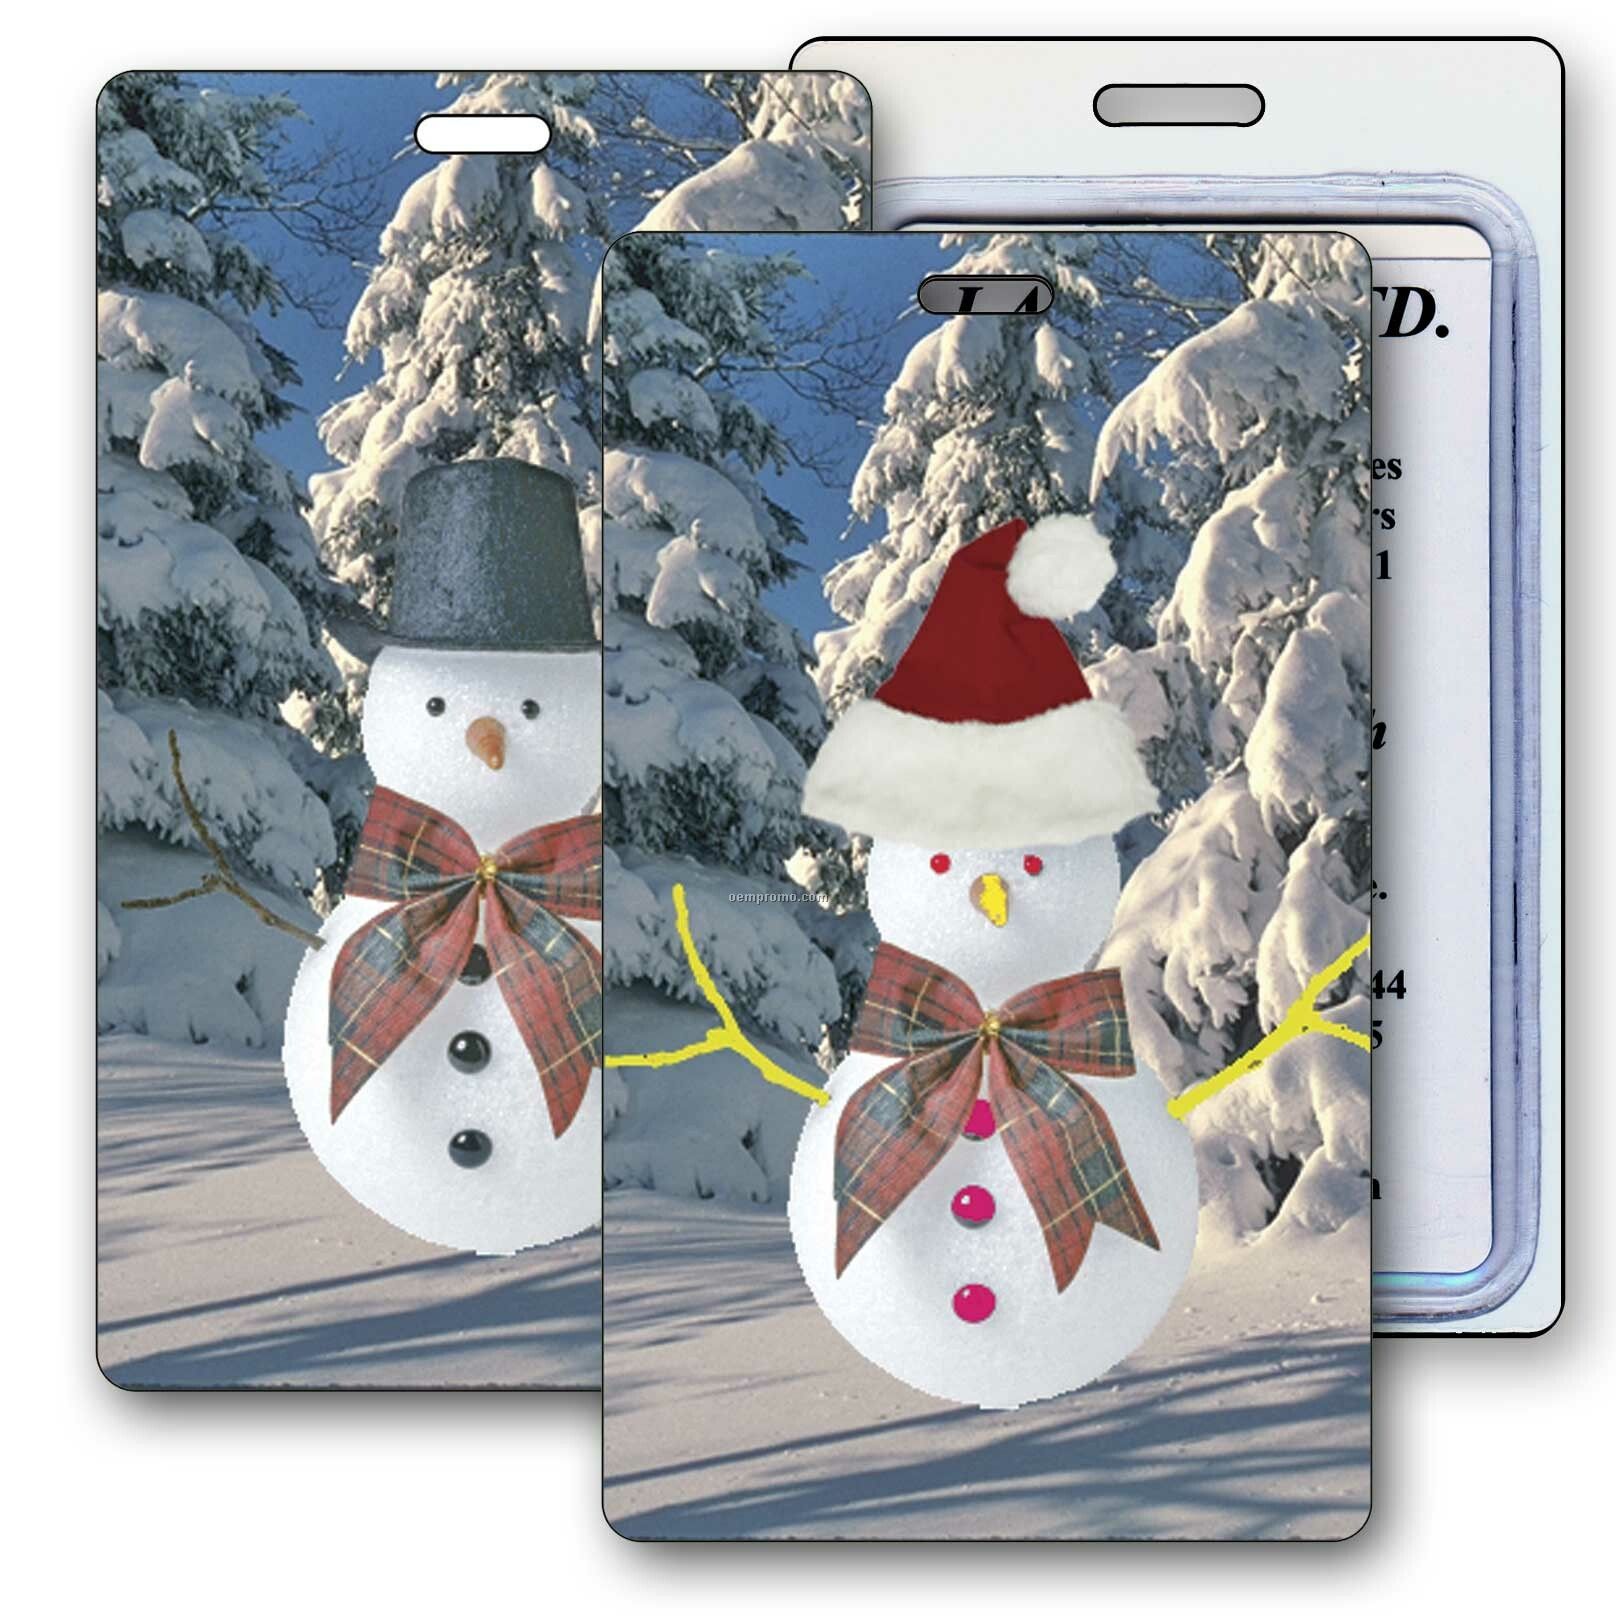 Luggage Tag 3d Lenticular Snowman, Santa Stock Image (Imprint Product)